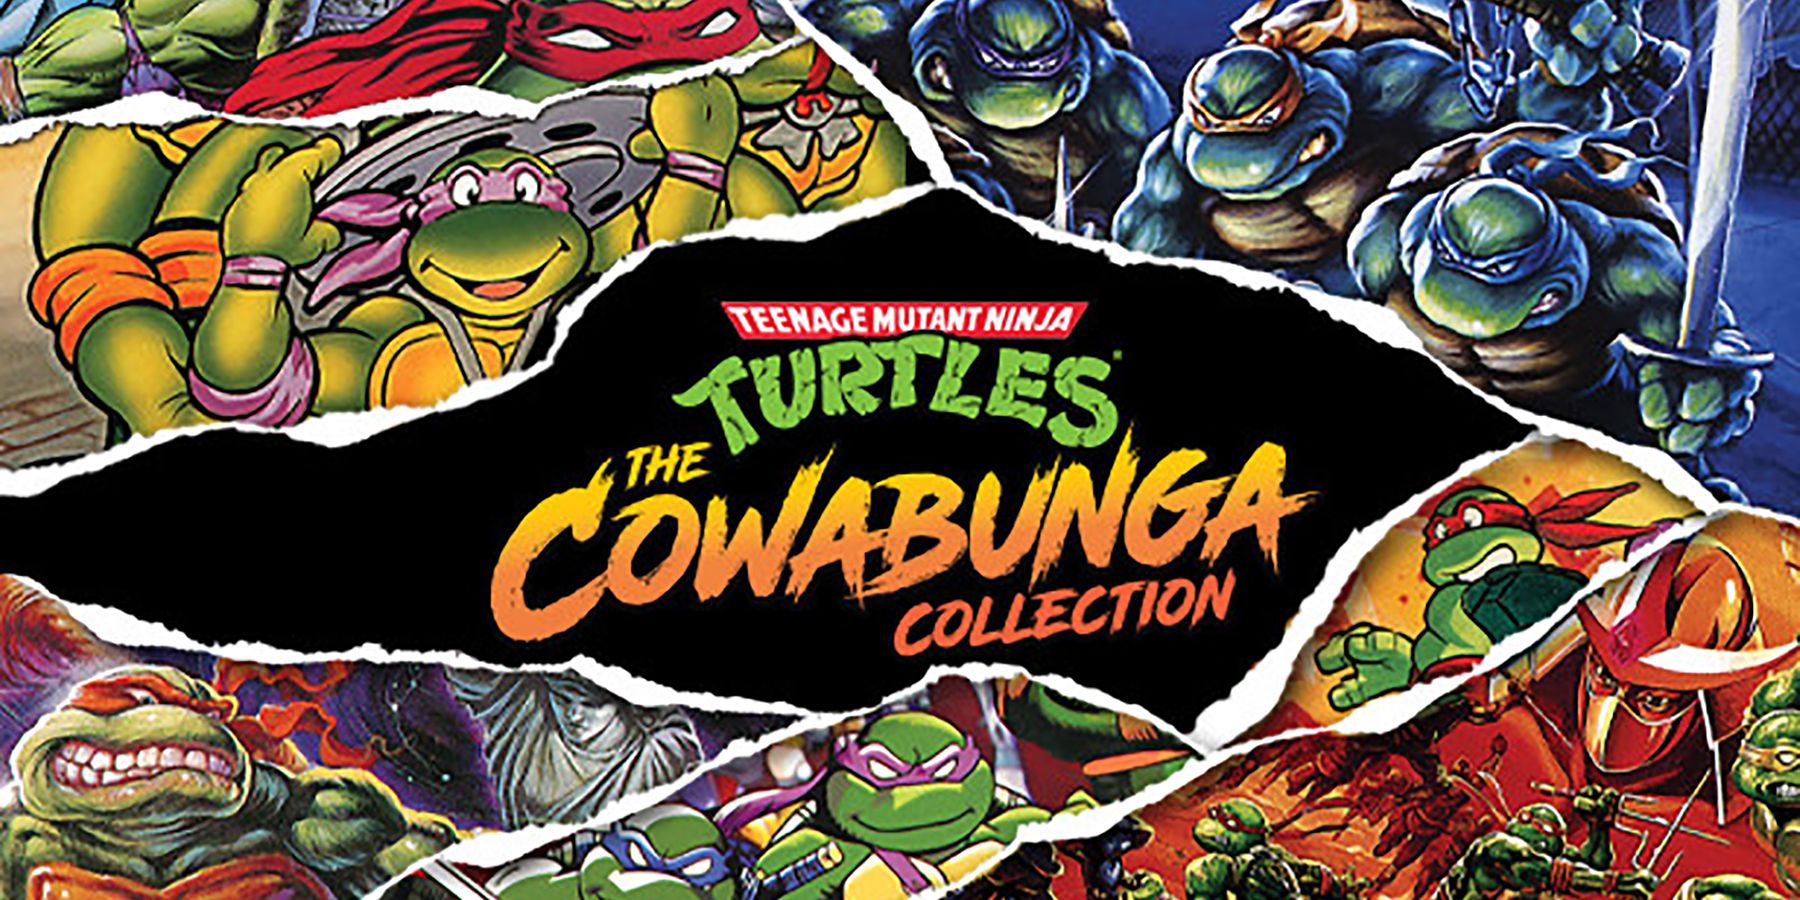 Cowabunga Collection Title